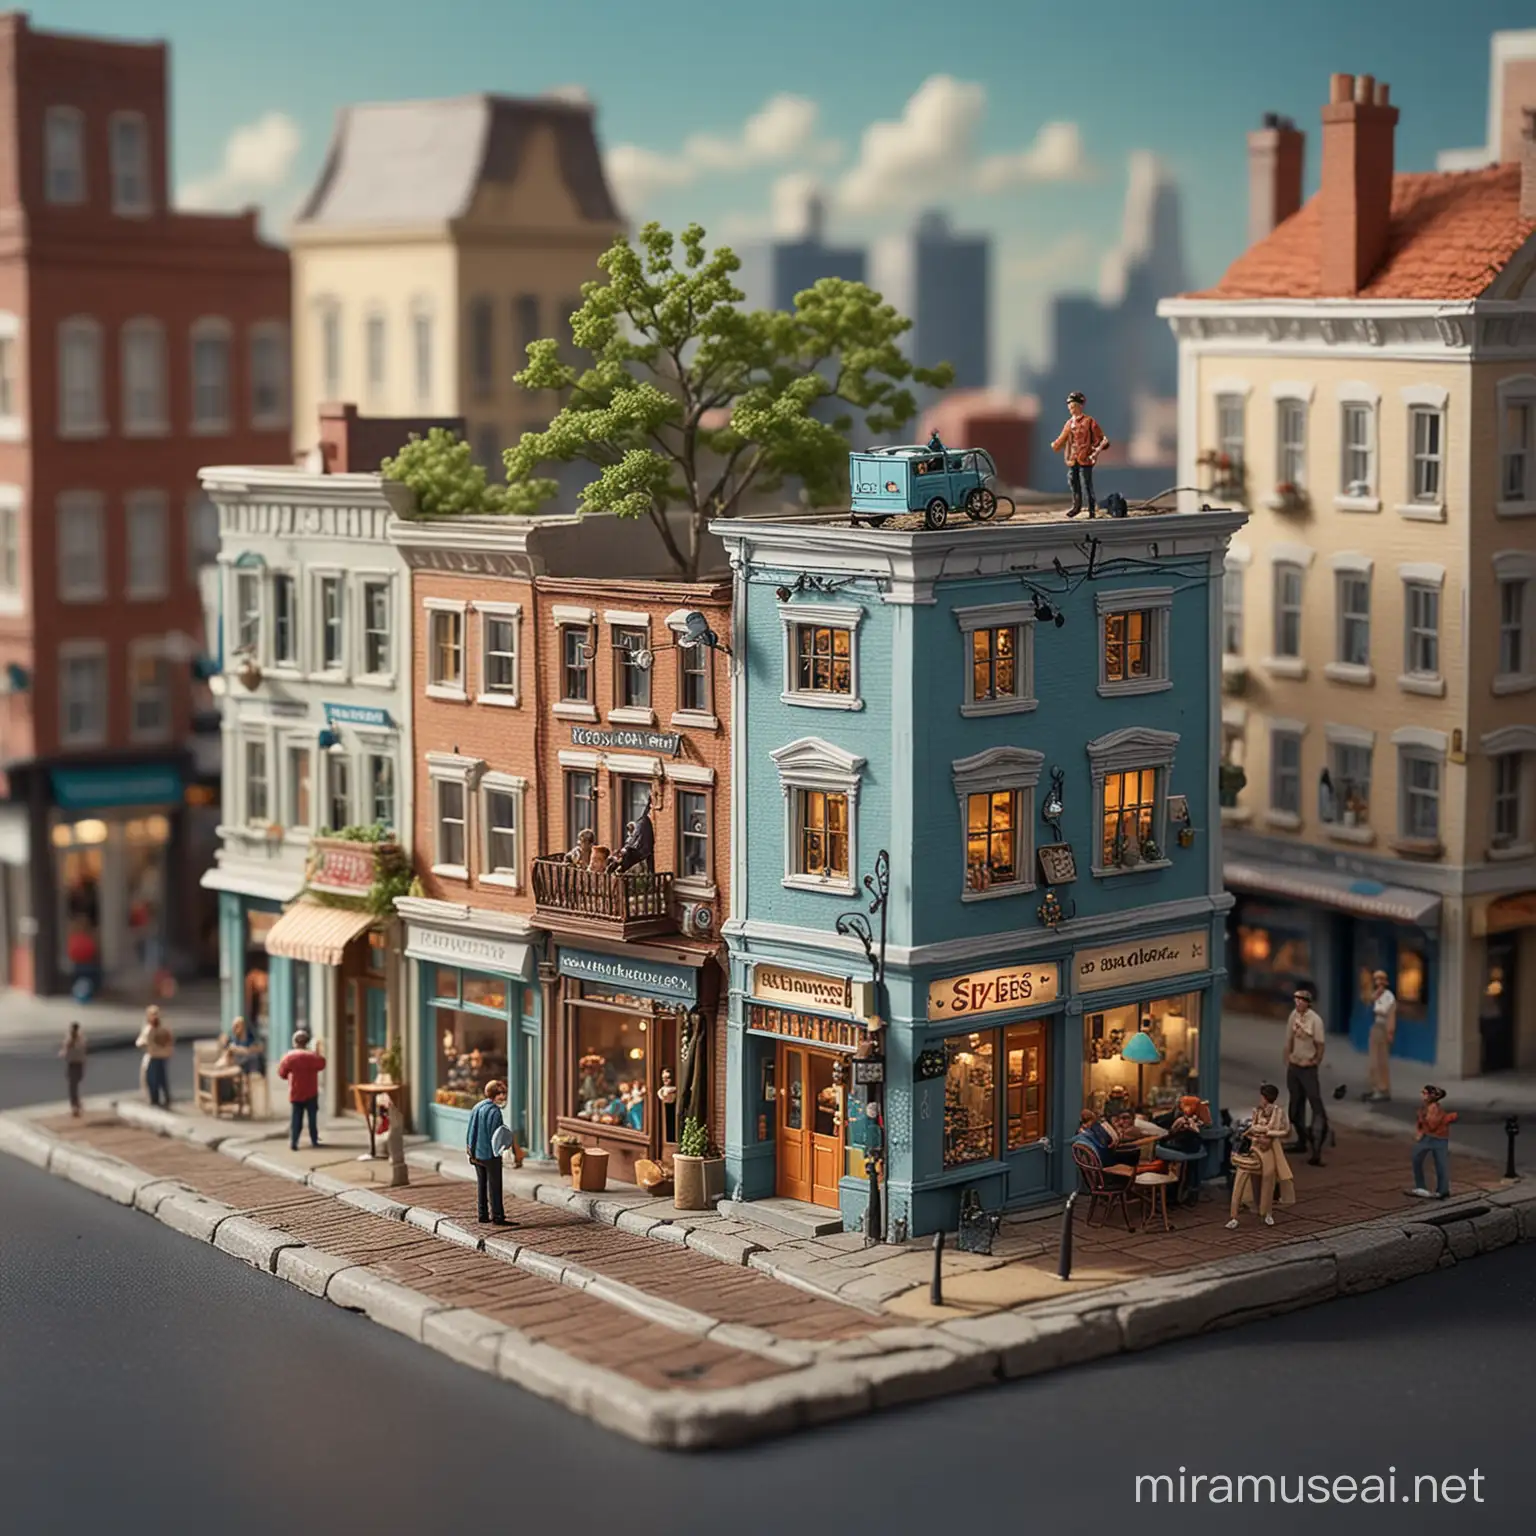 Urban Miniature Model Joyful Interaction with Tiny Cityscape